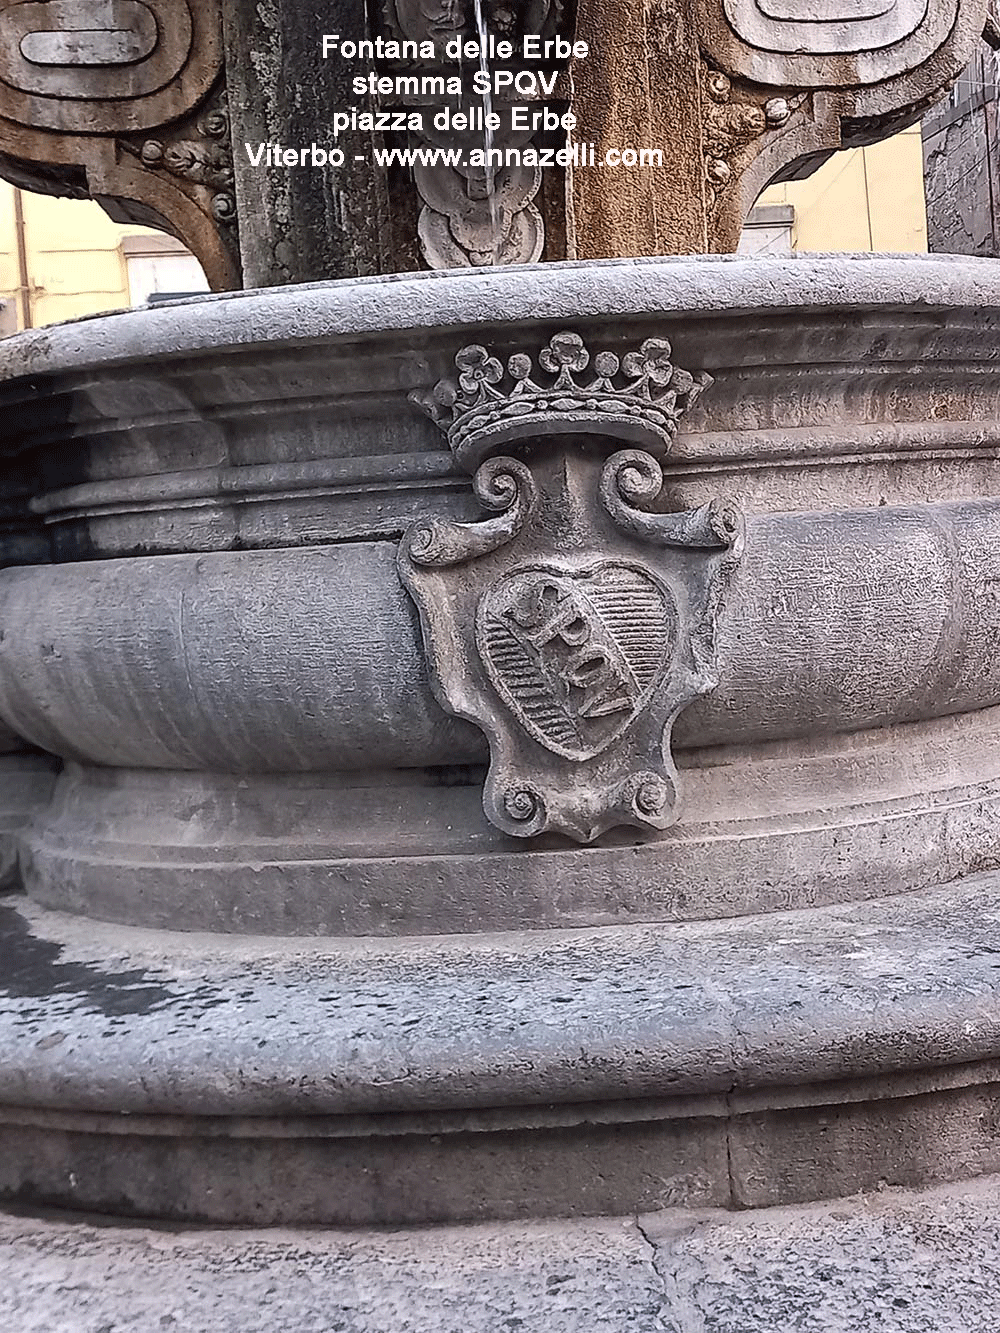 stemma SPQV fontana dei leoni piazza delle erbe viterbo info e foto anna zelli